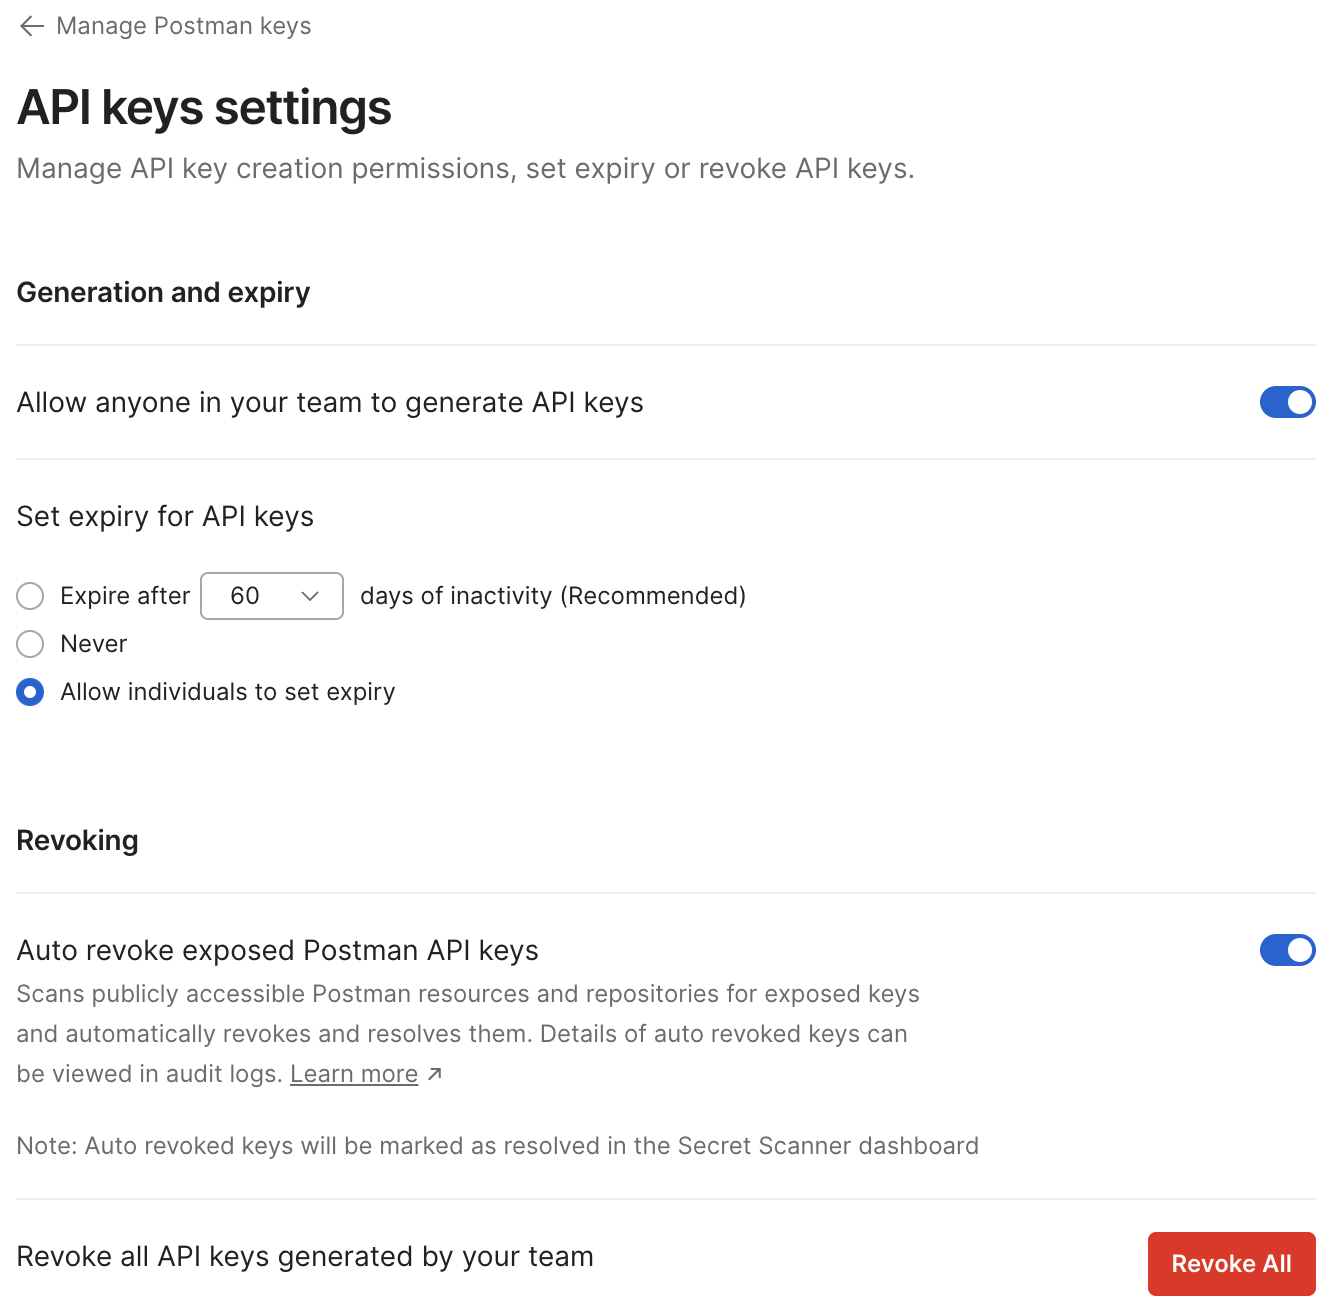 API keys settings page in Postman